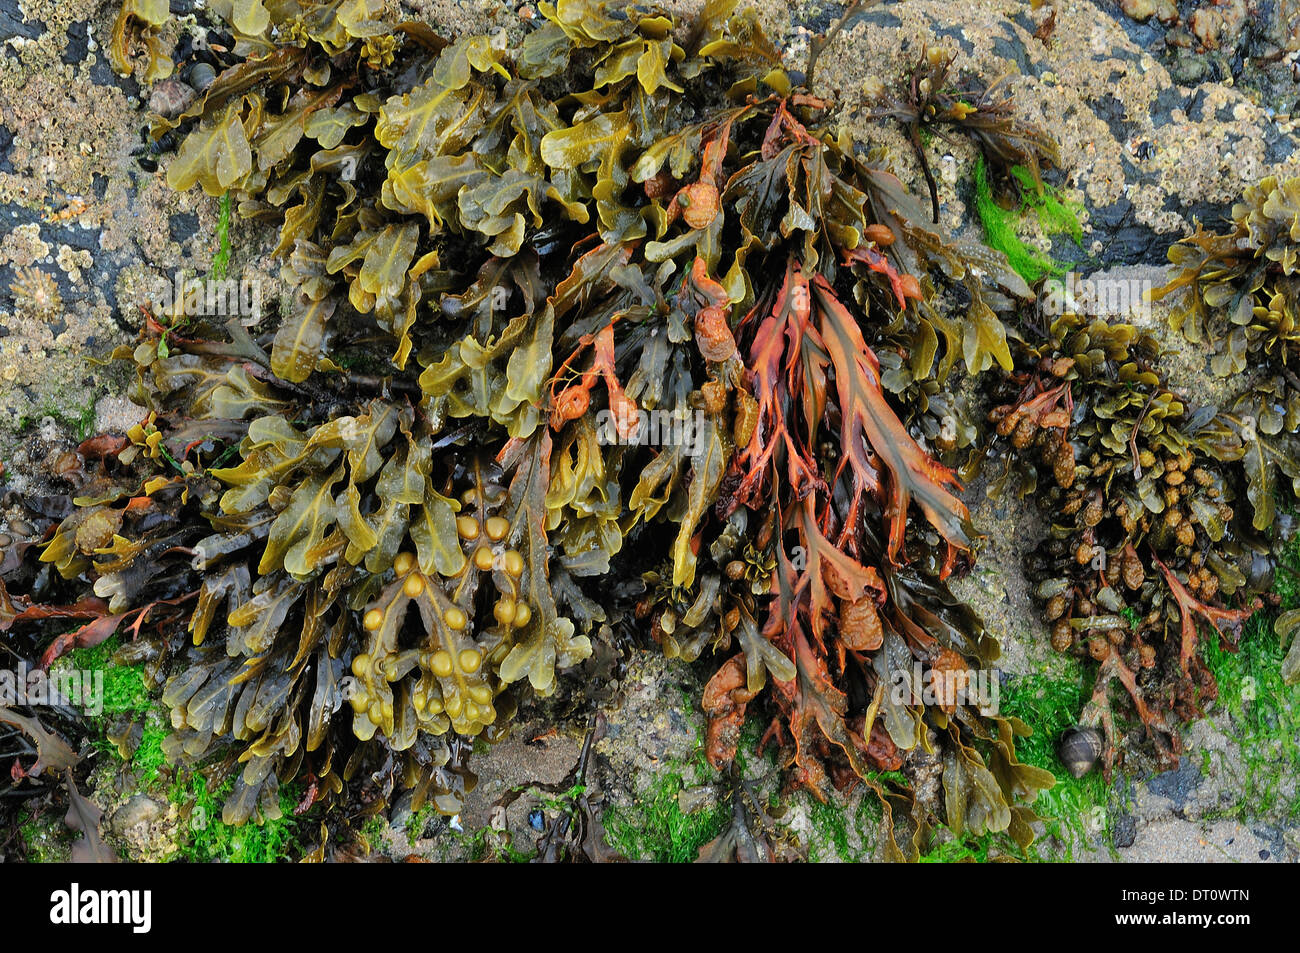 Bladder wrack or bladderwrack brown alga Fucus vesicolosus, Fucaceae, Carrick, Donegal,  Ireland Stock Photo